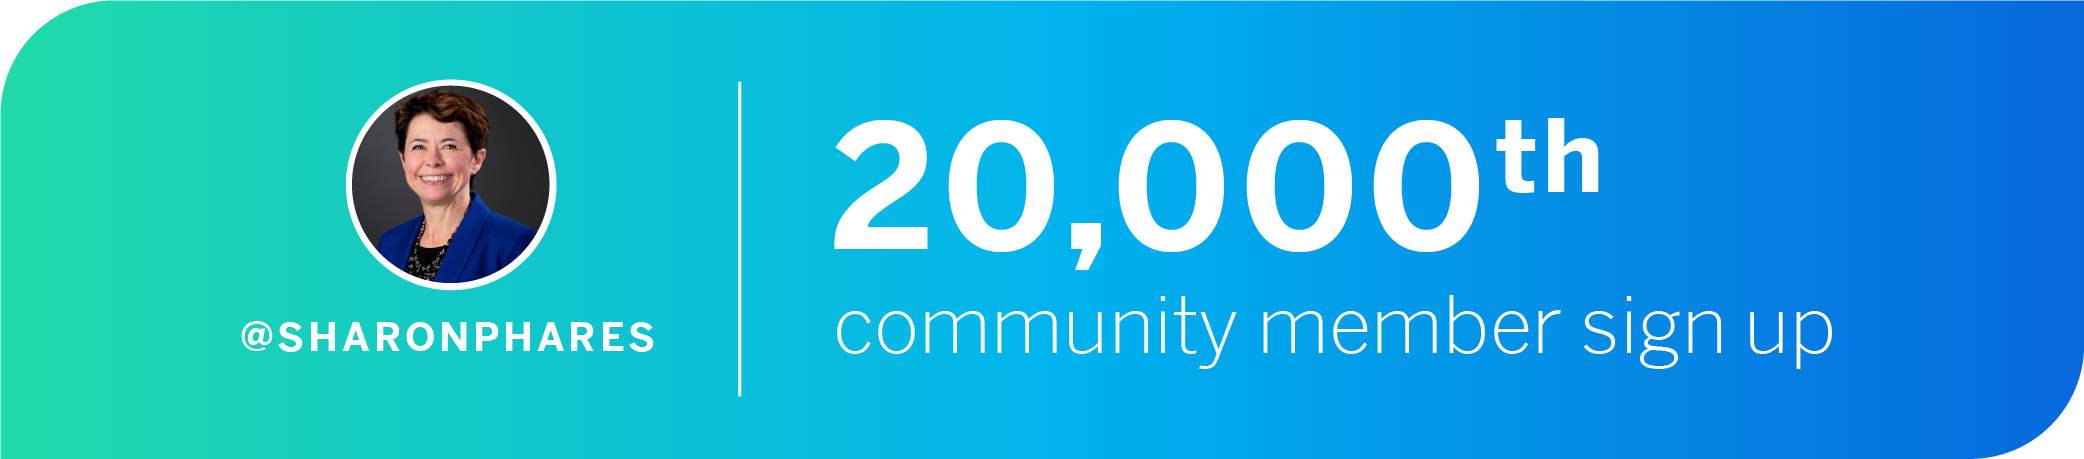 @Sharonphares, 20,000th community member sign up